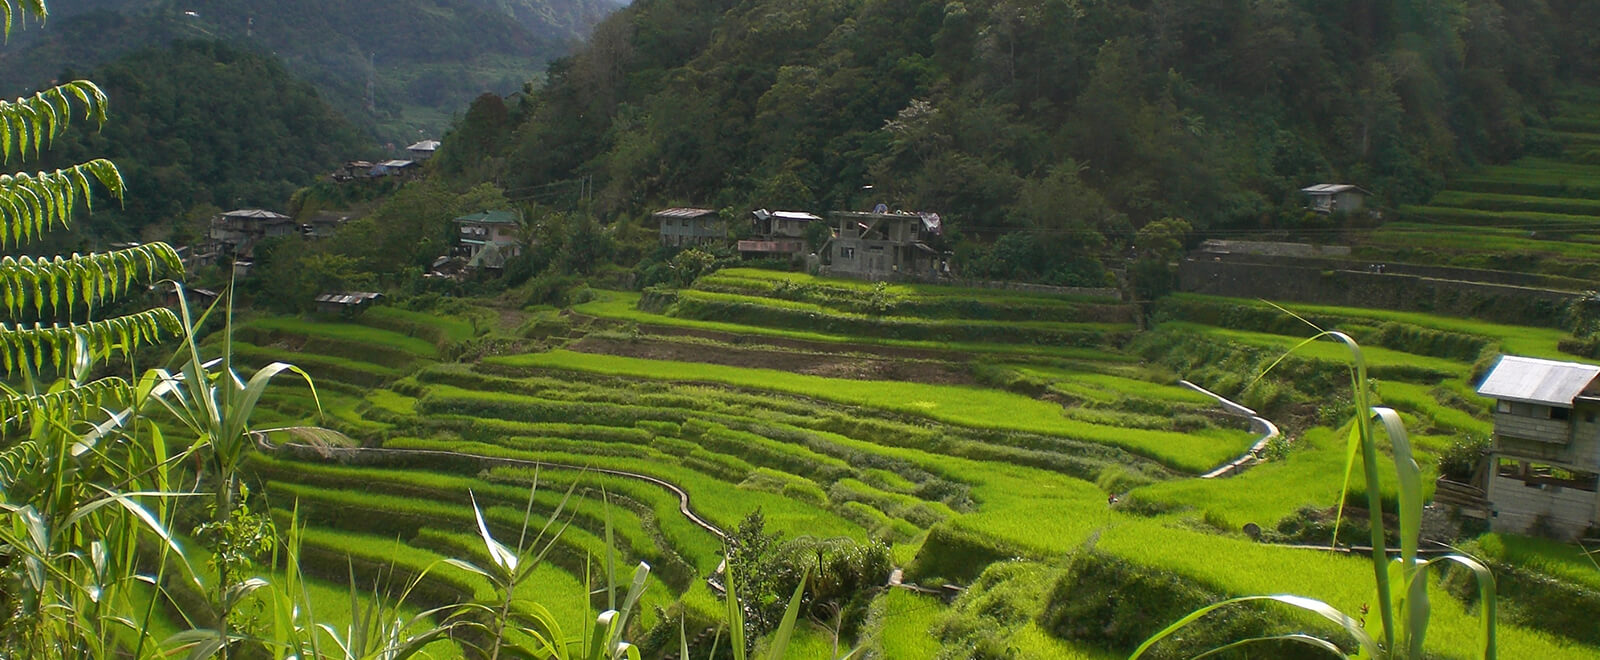 landscape open rural area in Philippines 